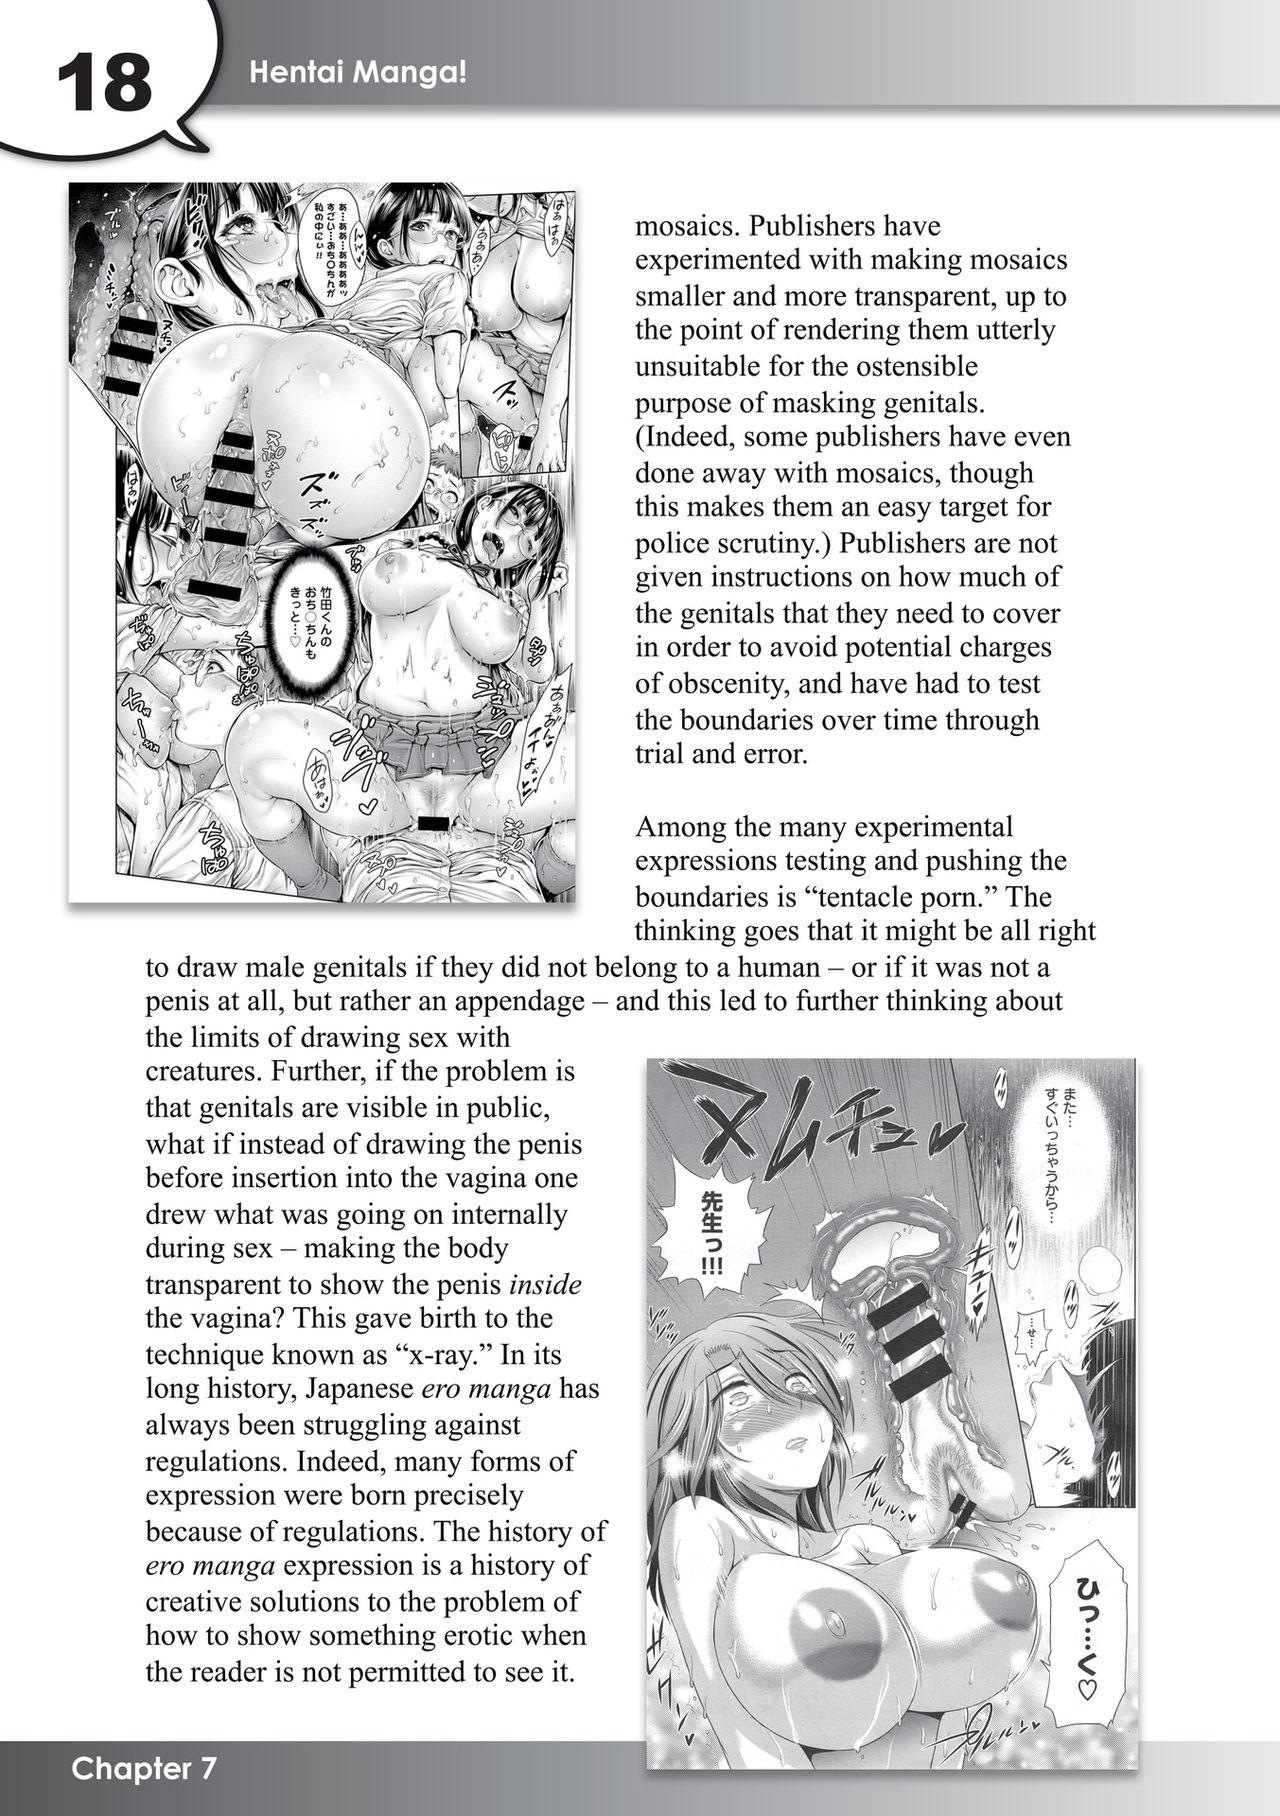 Hentai Manga! A Brief History of Pornographic Comics in Japan 18